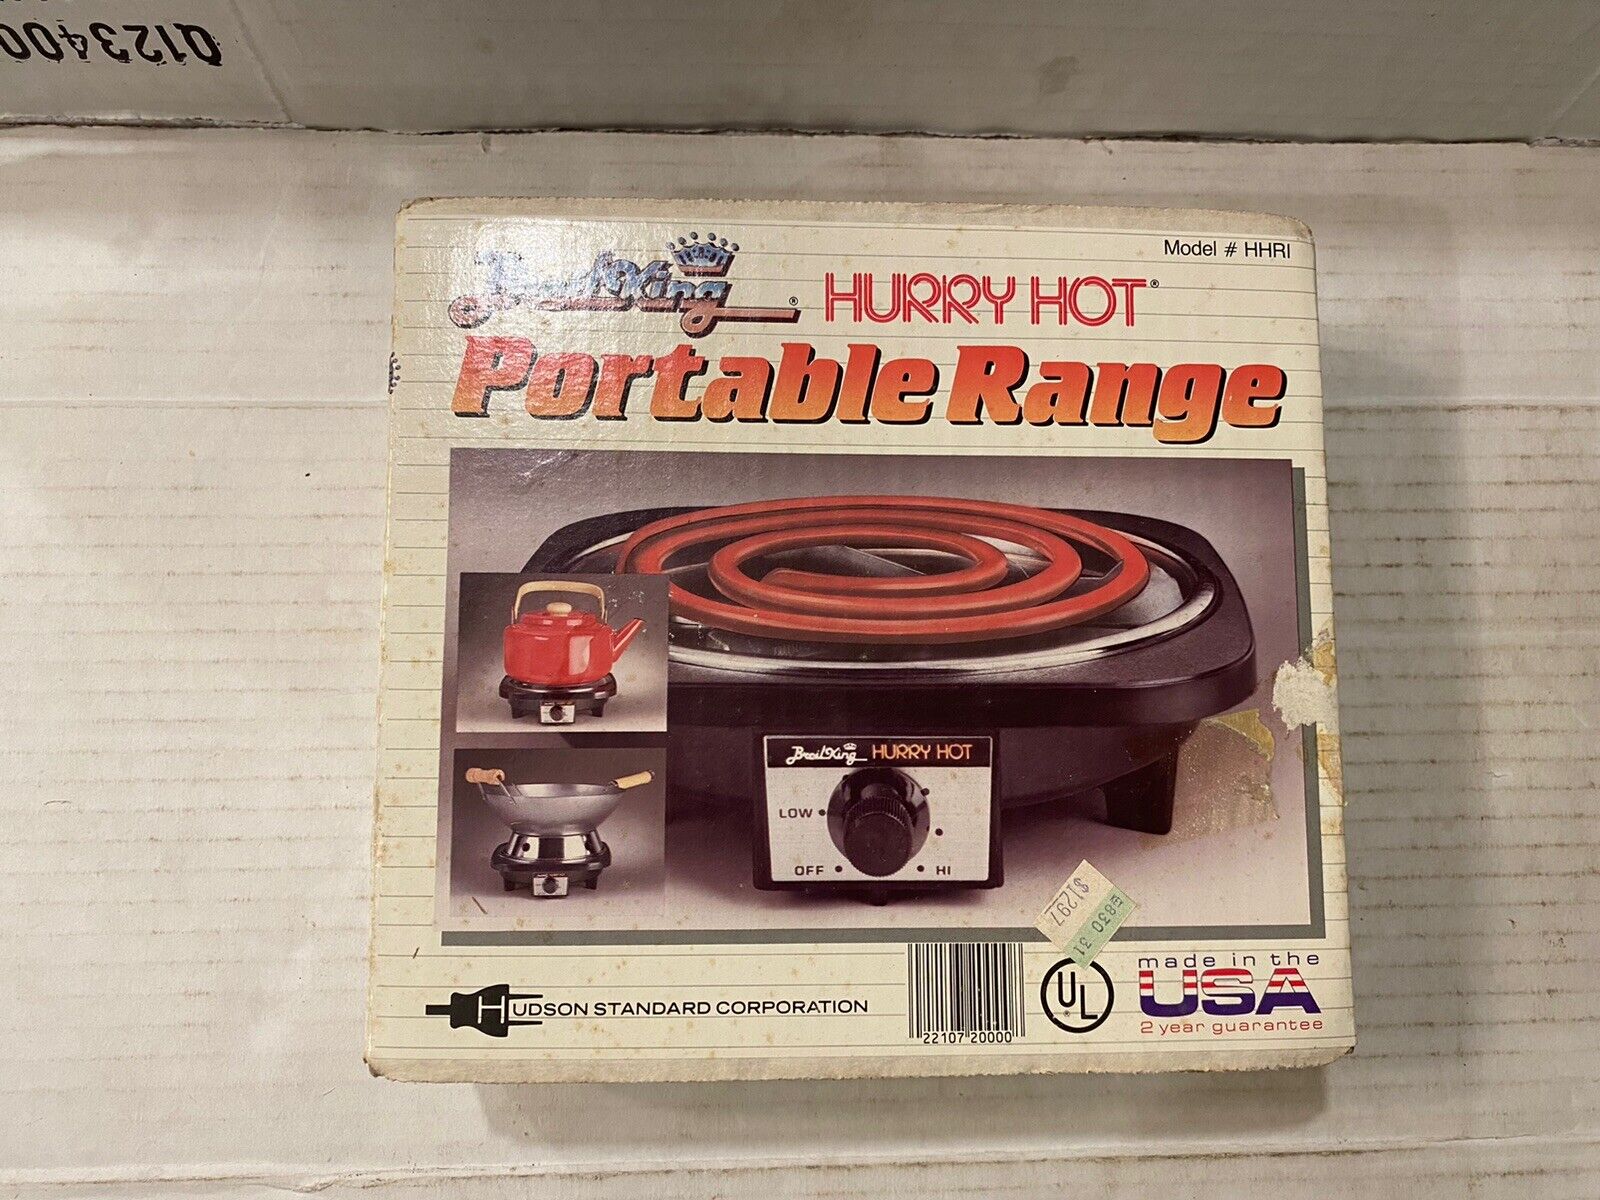 Broil King Portable Range Model #HHRI - Hot Plate - Single Cooktop